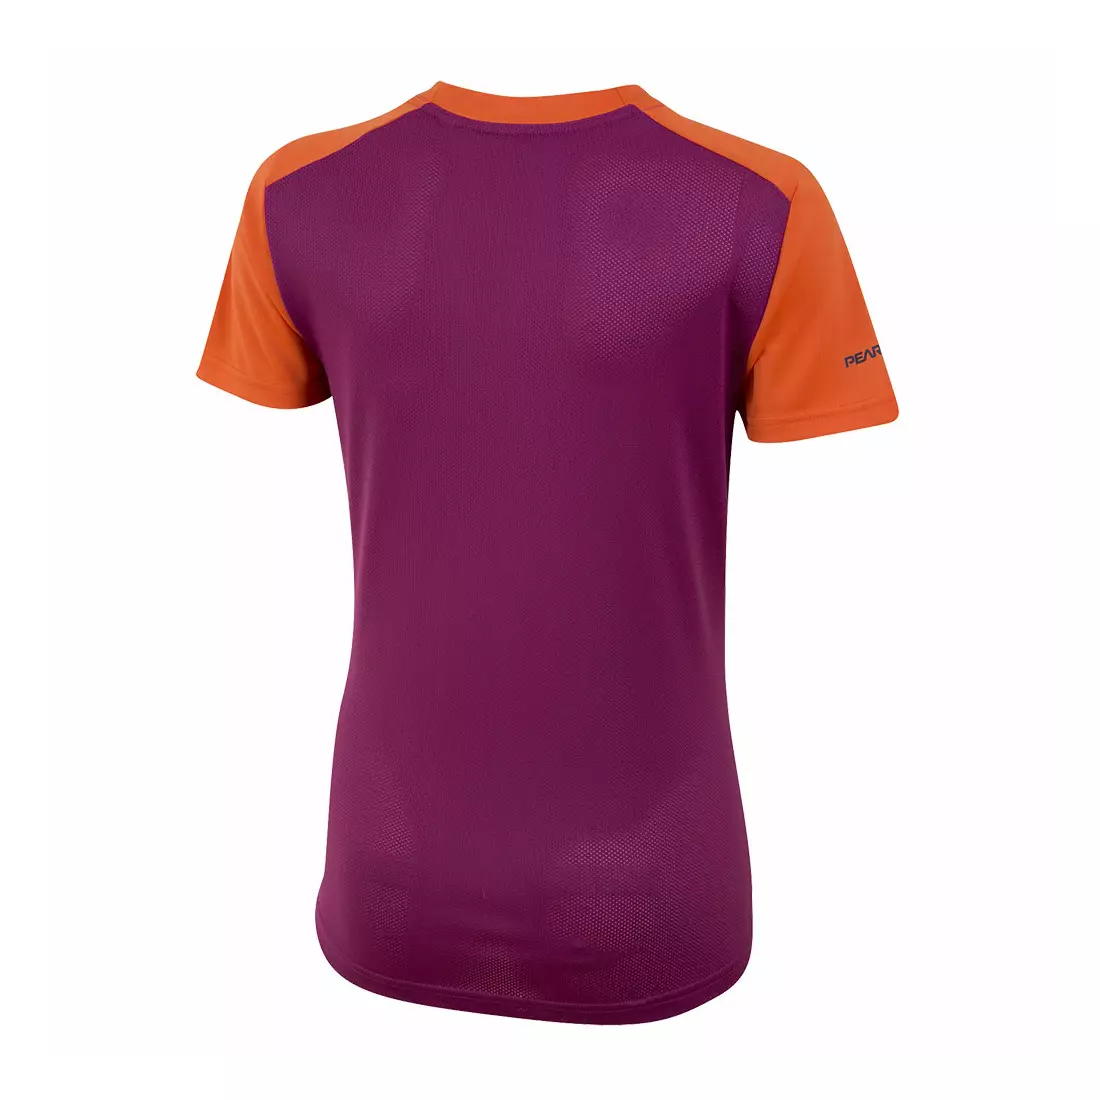 PEARL IZUMI LAUNCH women's cycling jersey 19221505-4WH, purple